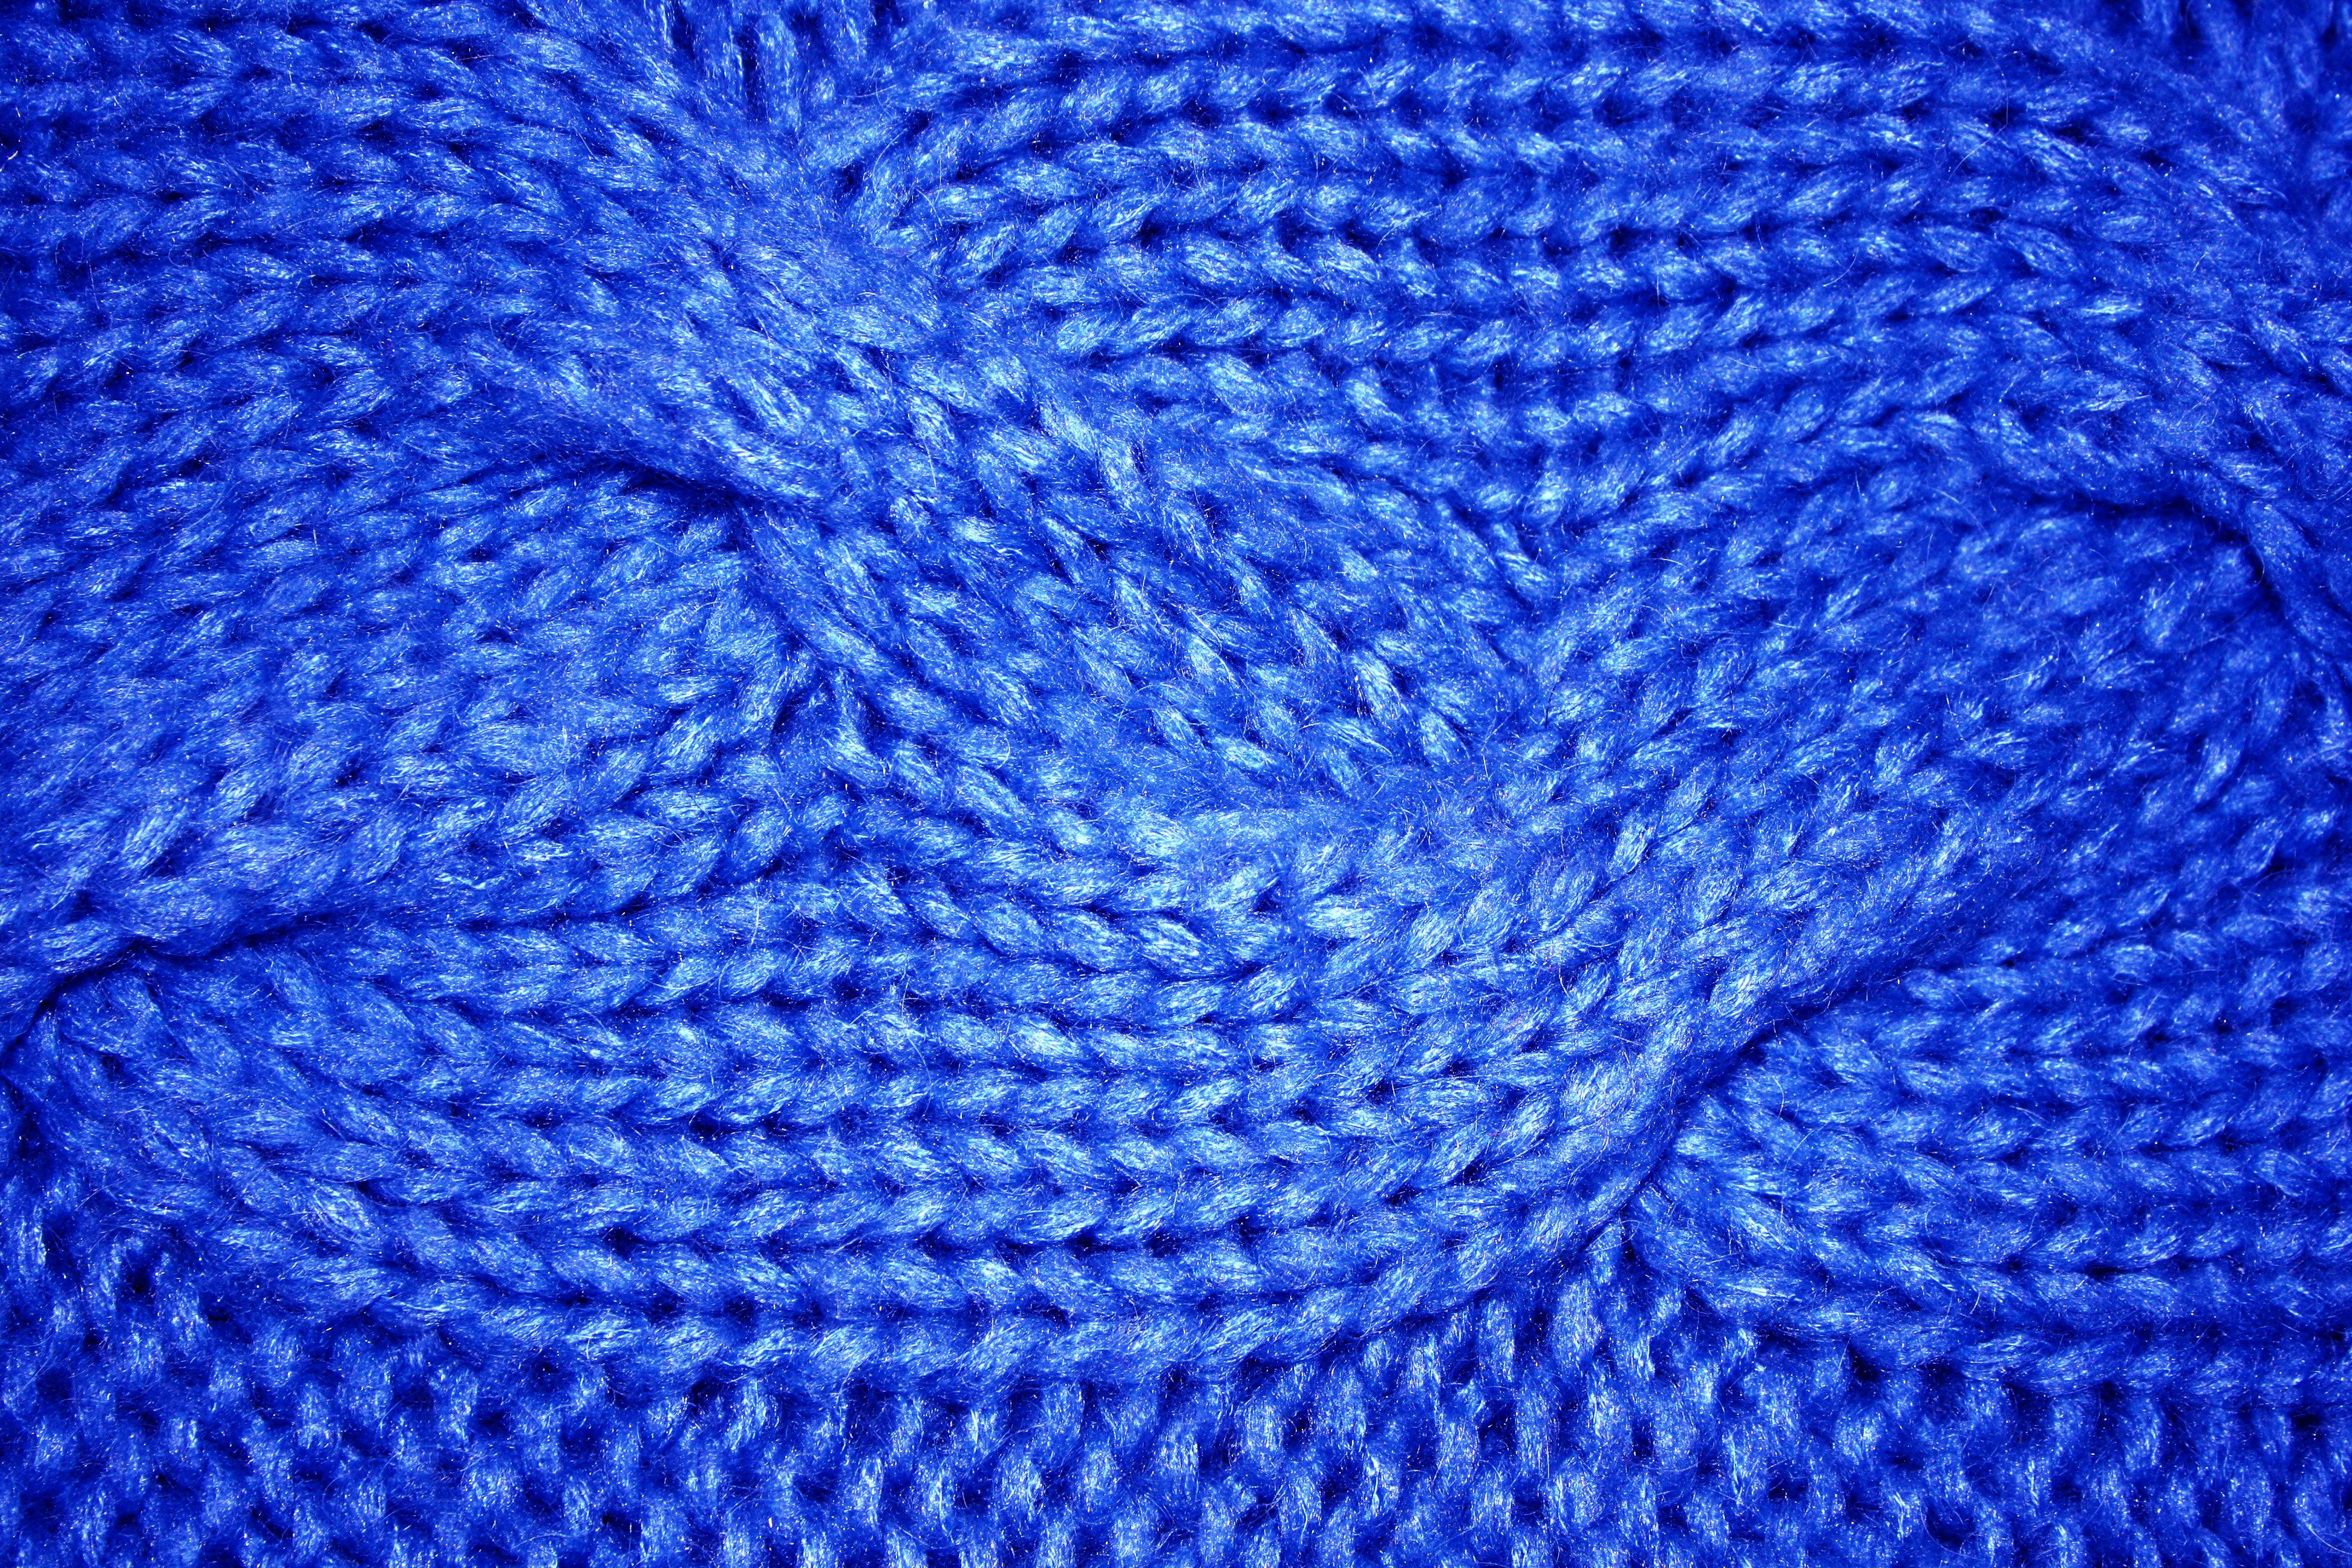 Cobalt Blue Cable Knit Pattern Texture Picture | Free Photograph ...